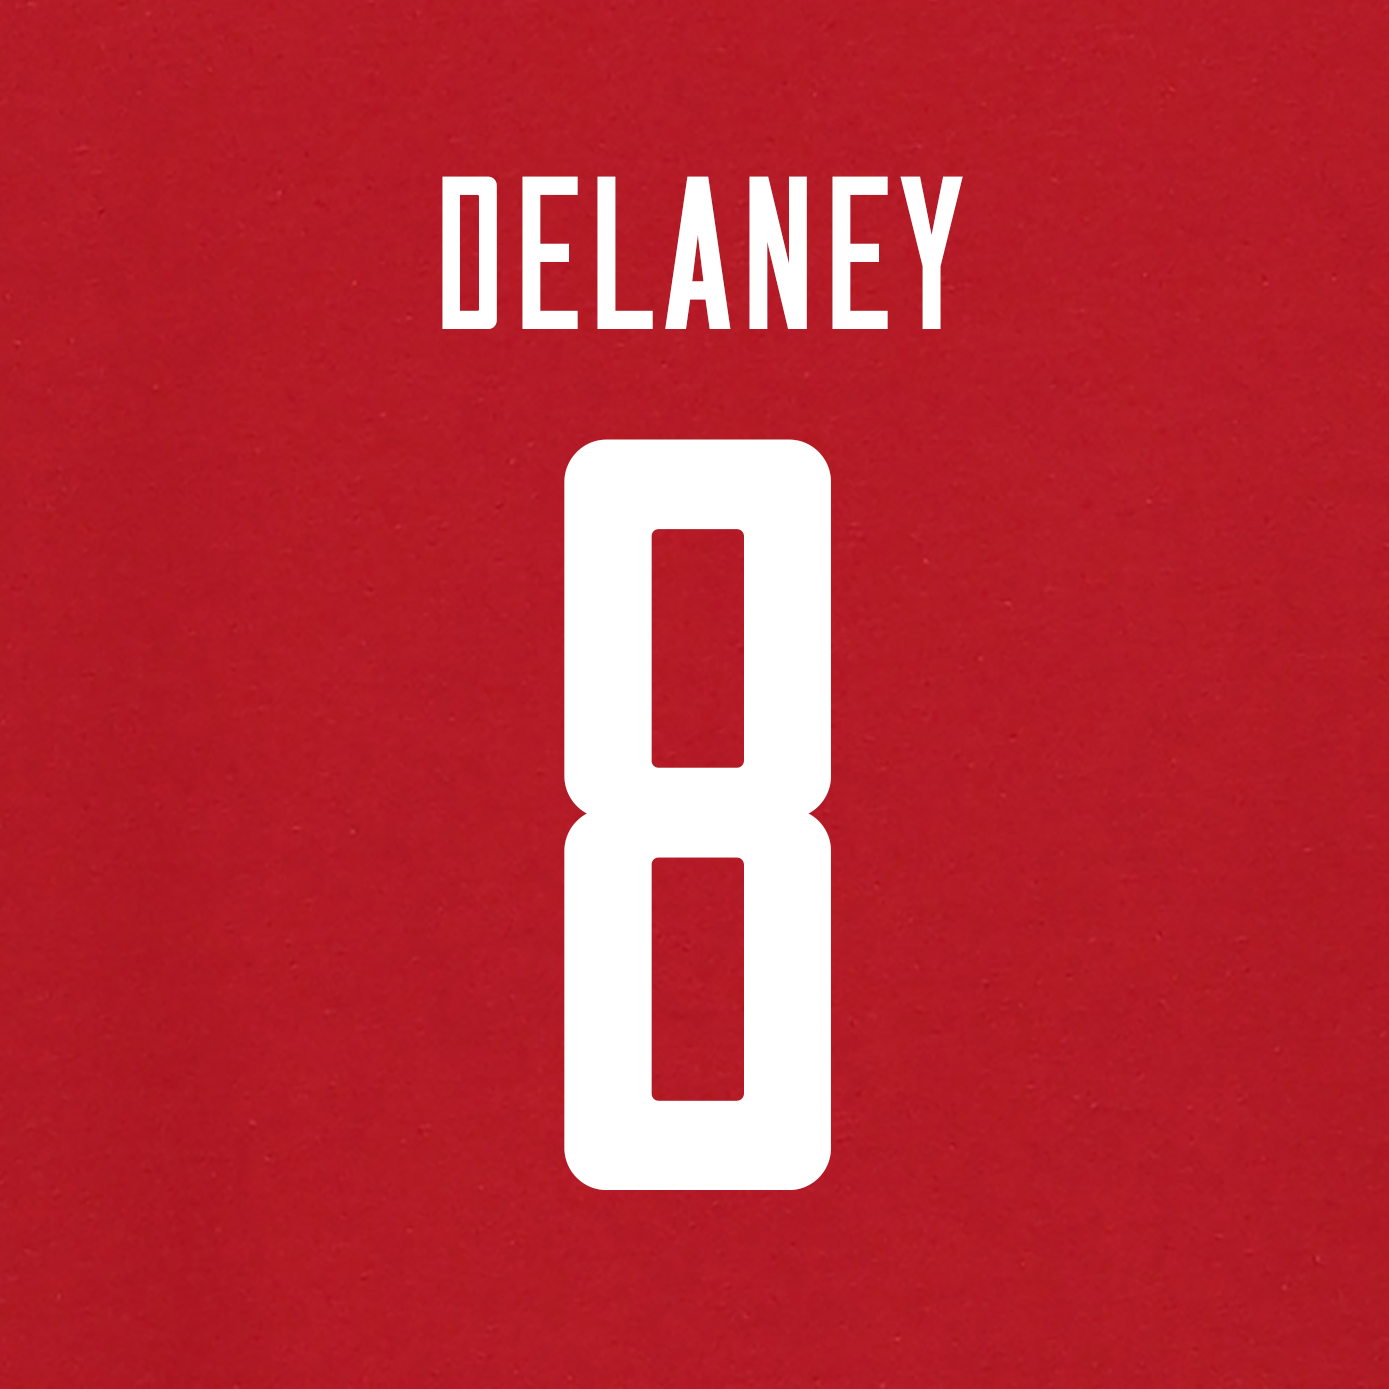 Danmark landshold, t-shirt, Delany 8, danish red, large |